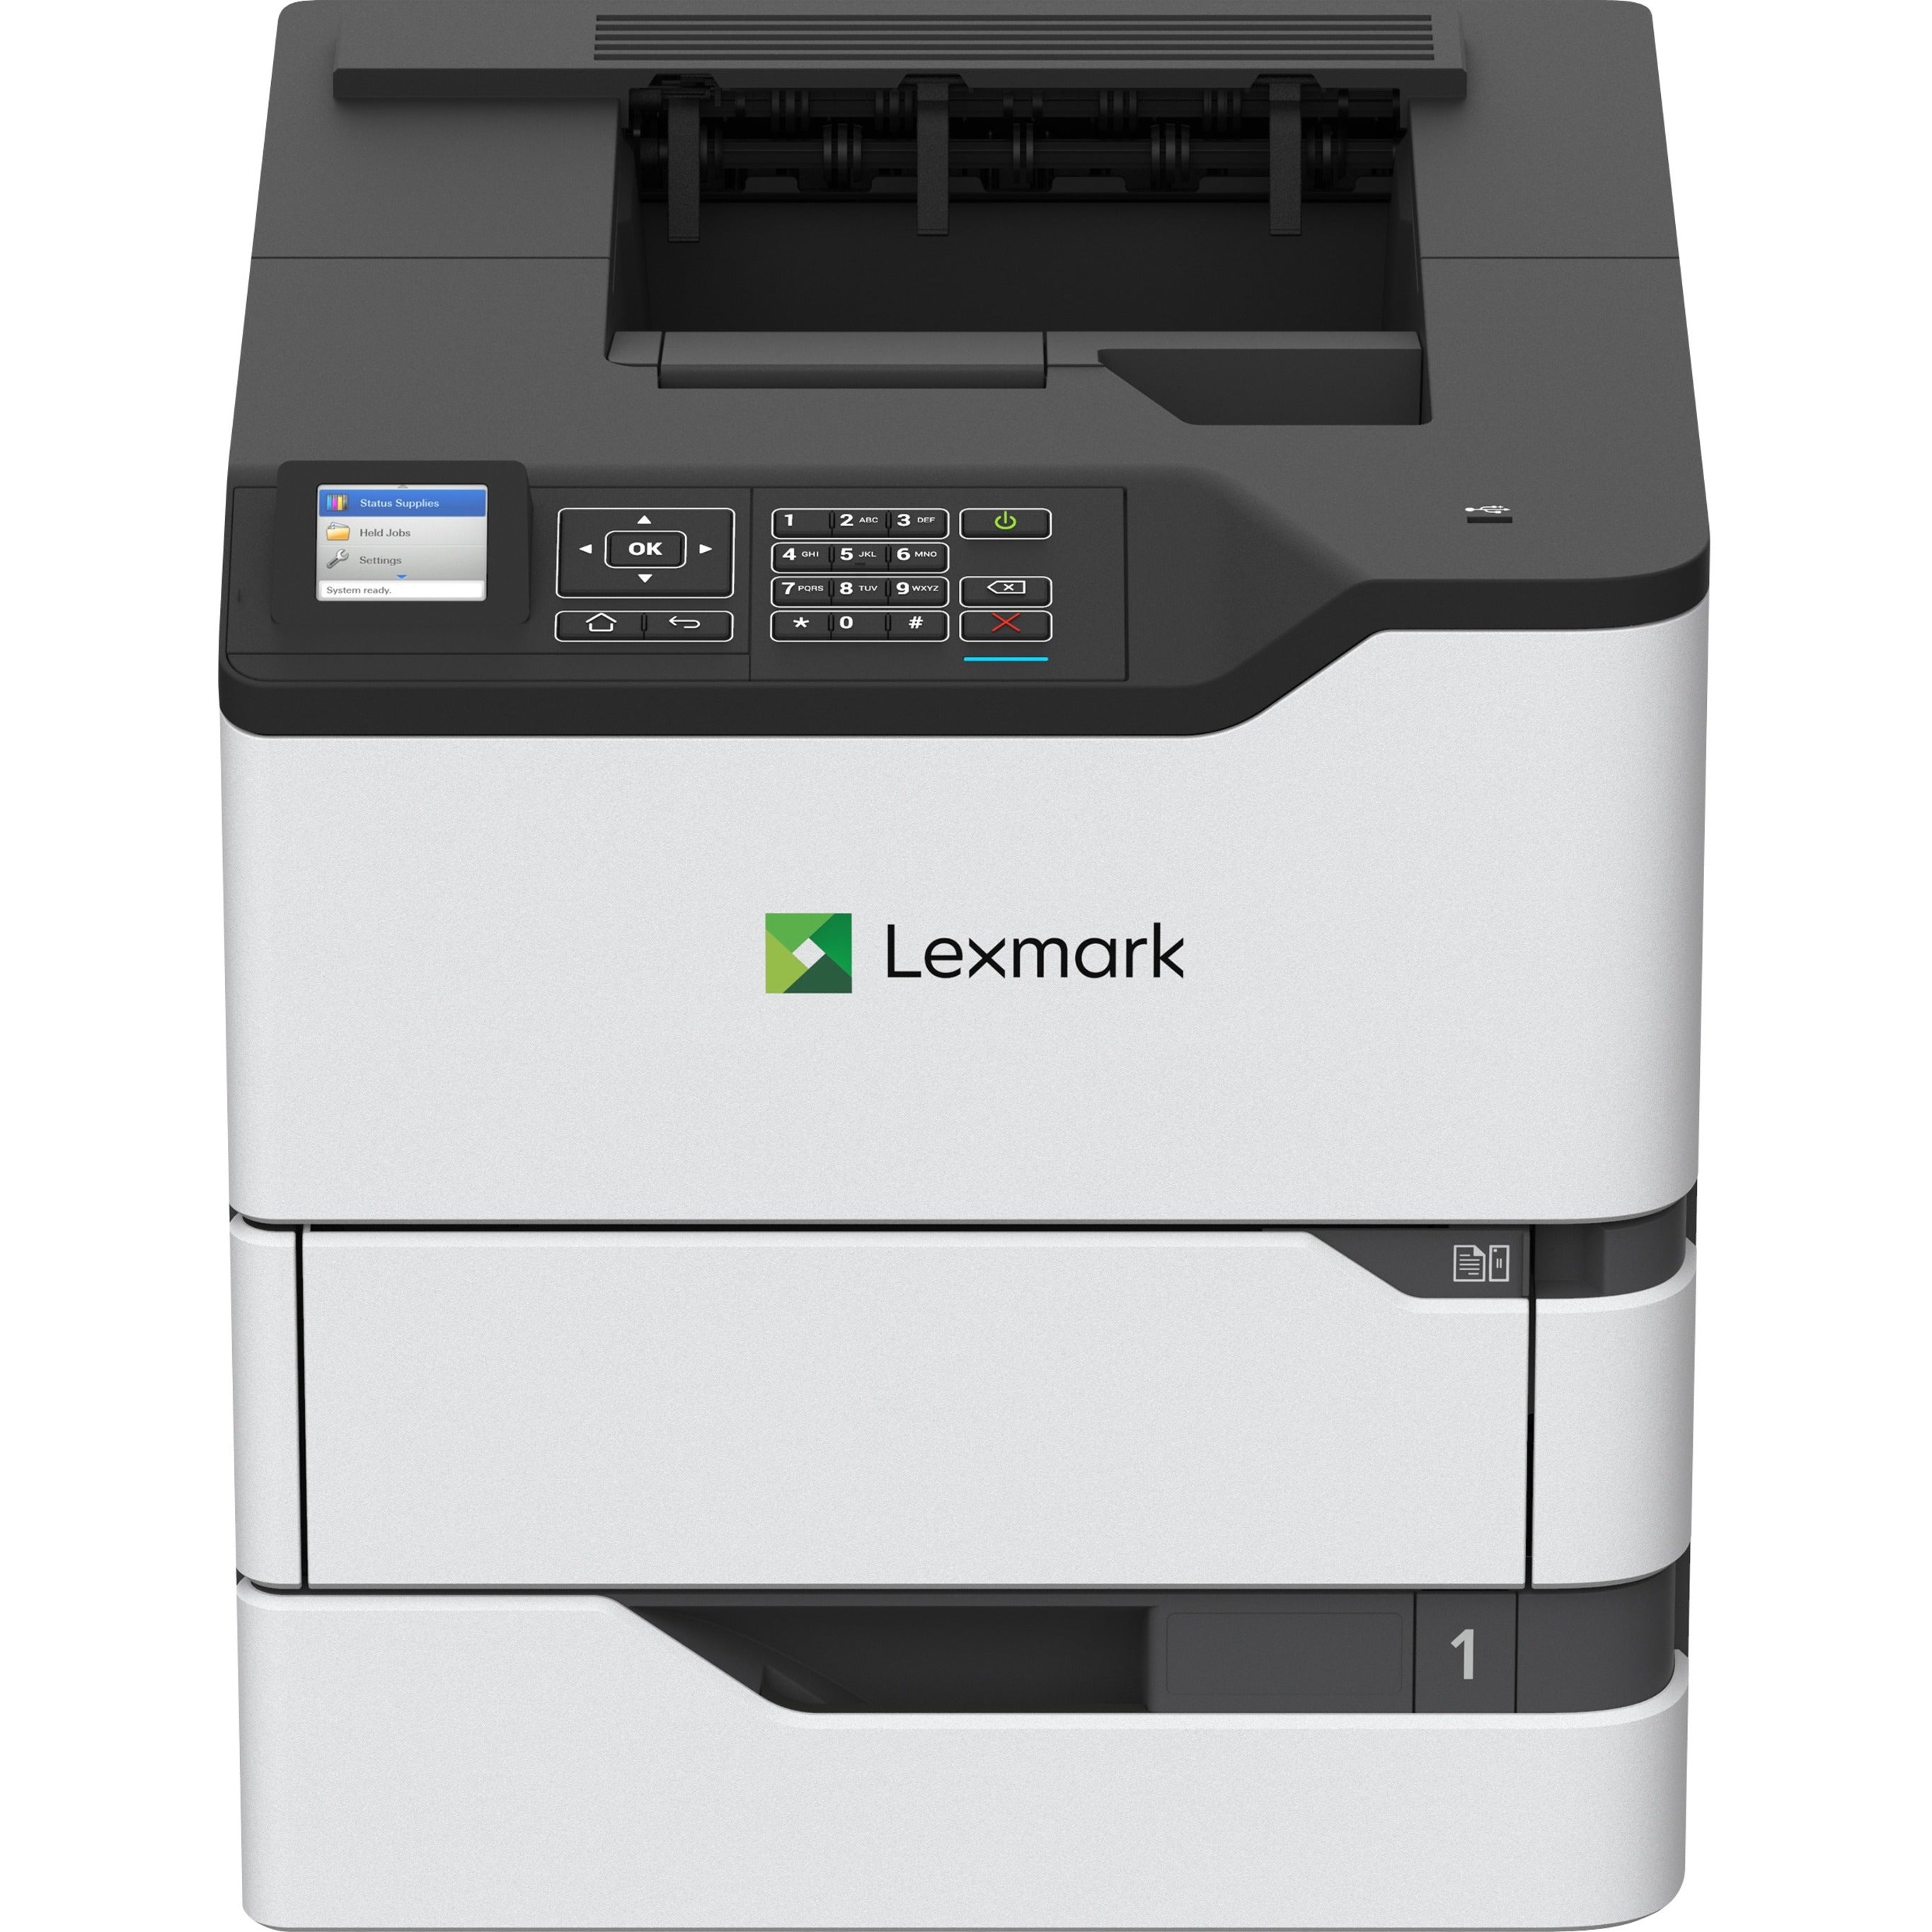 Lexmark 50GT200 MS823dn Laser Printer, Monochrome, 65 ppm Print Speed